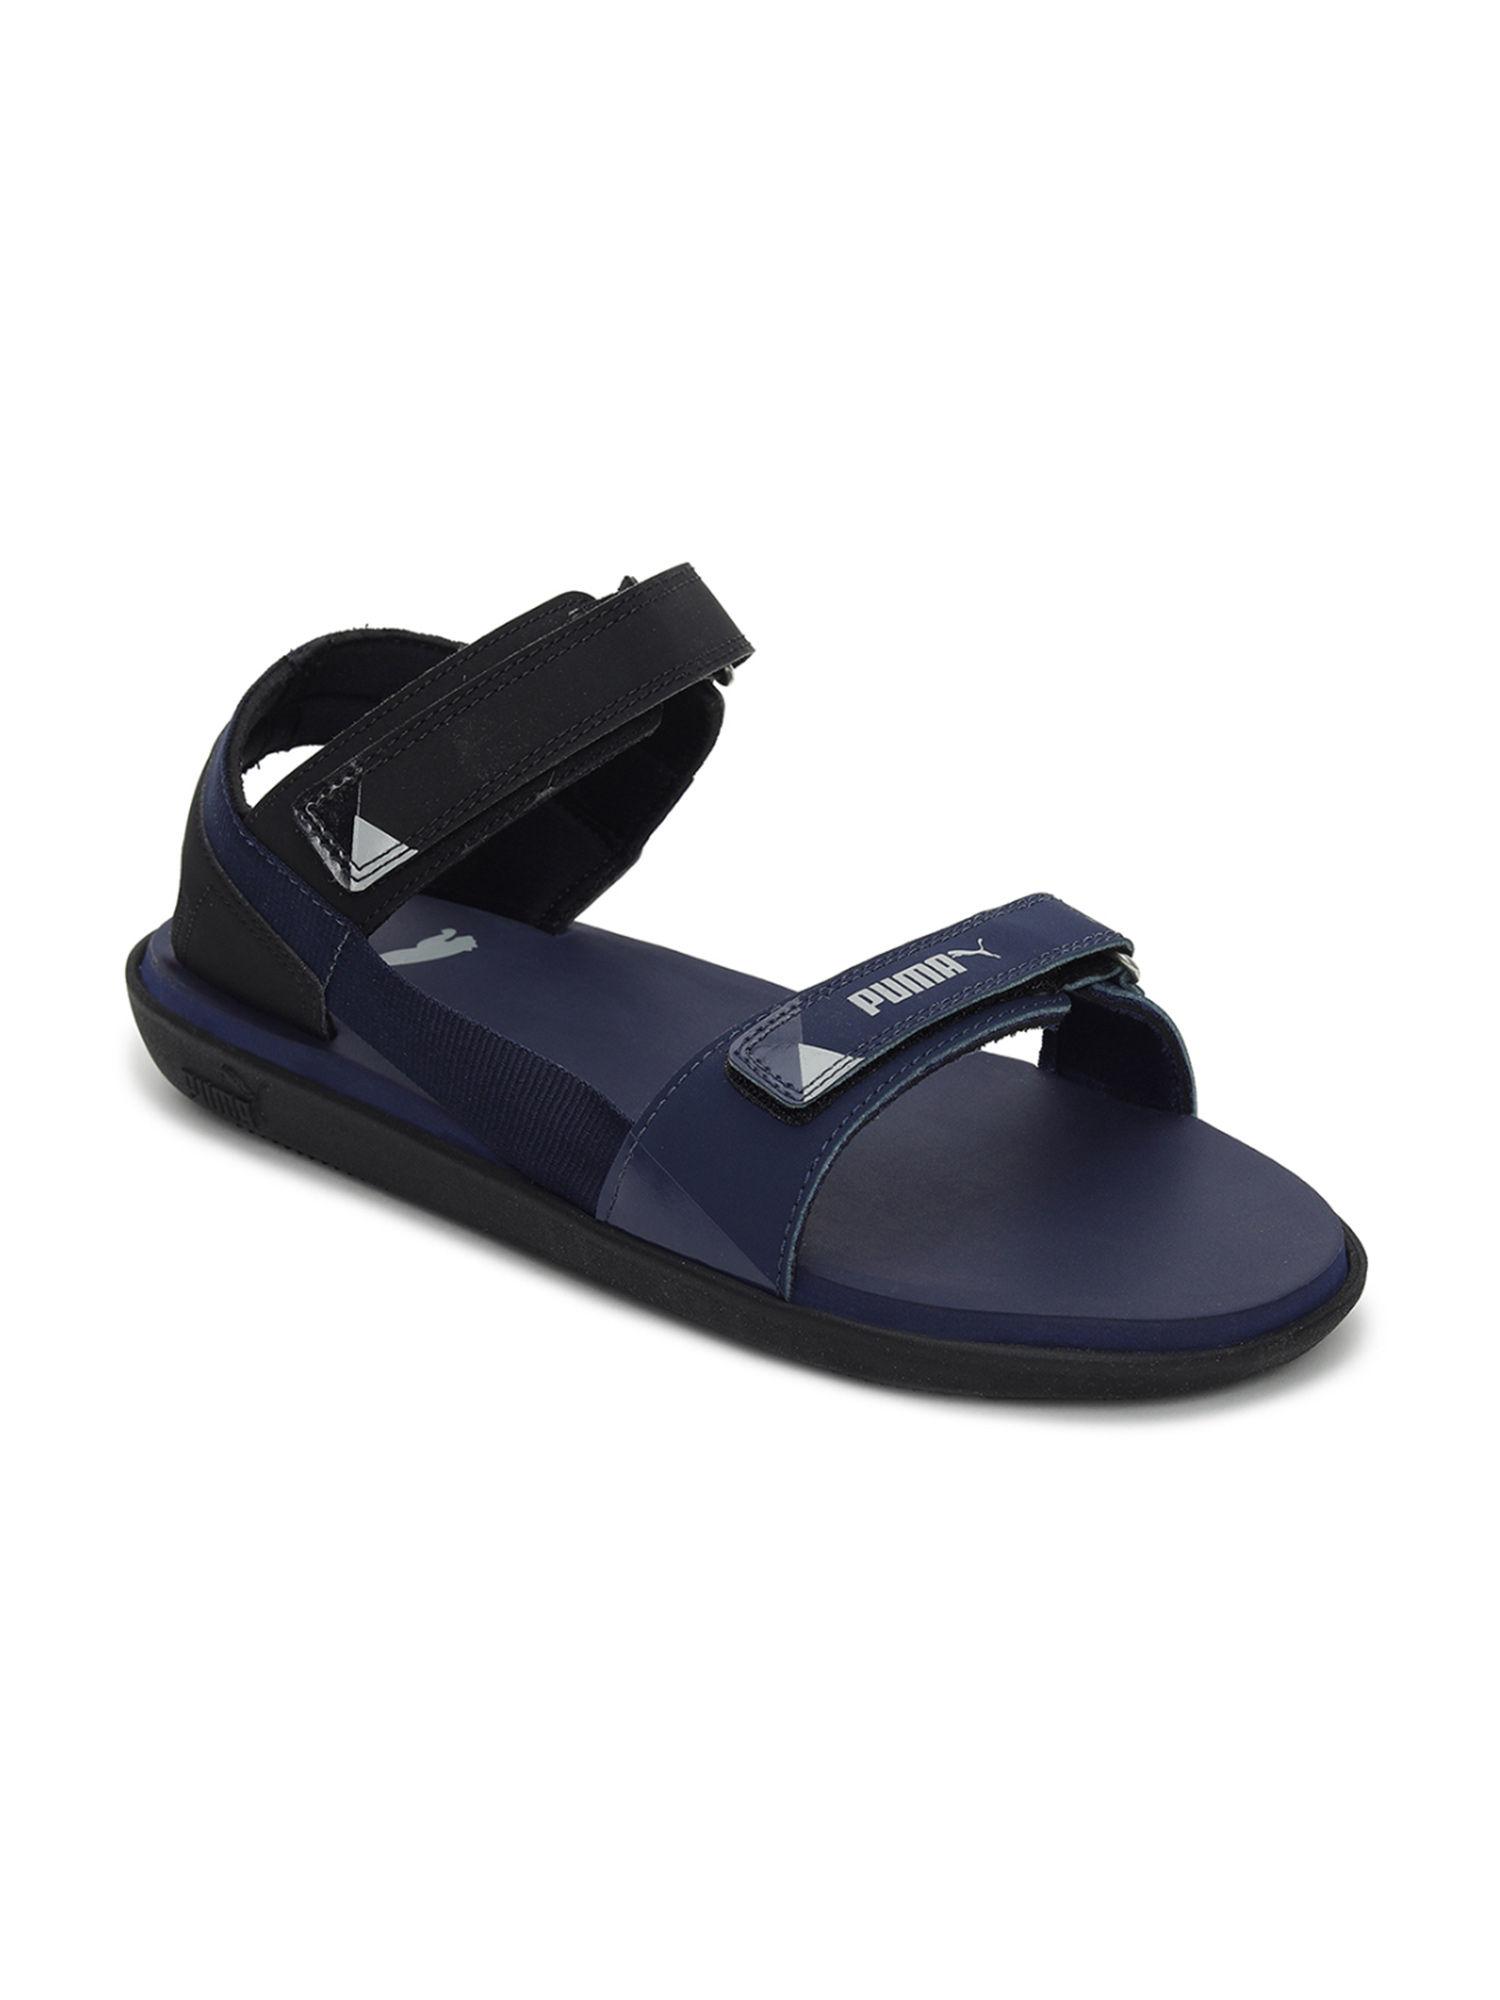 Pebble Blue Casual Sandals